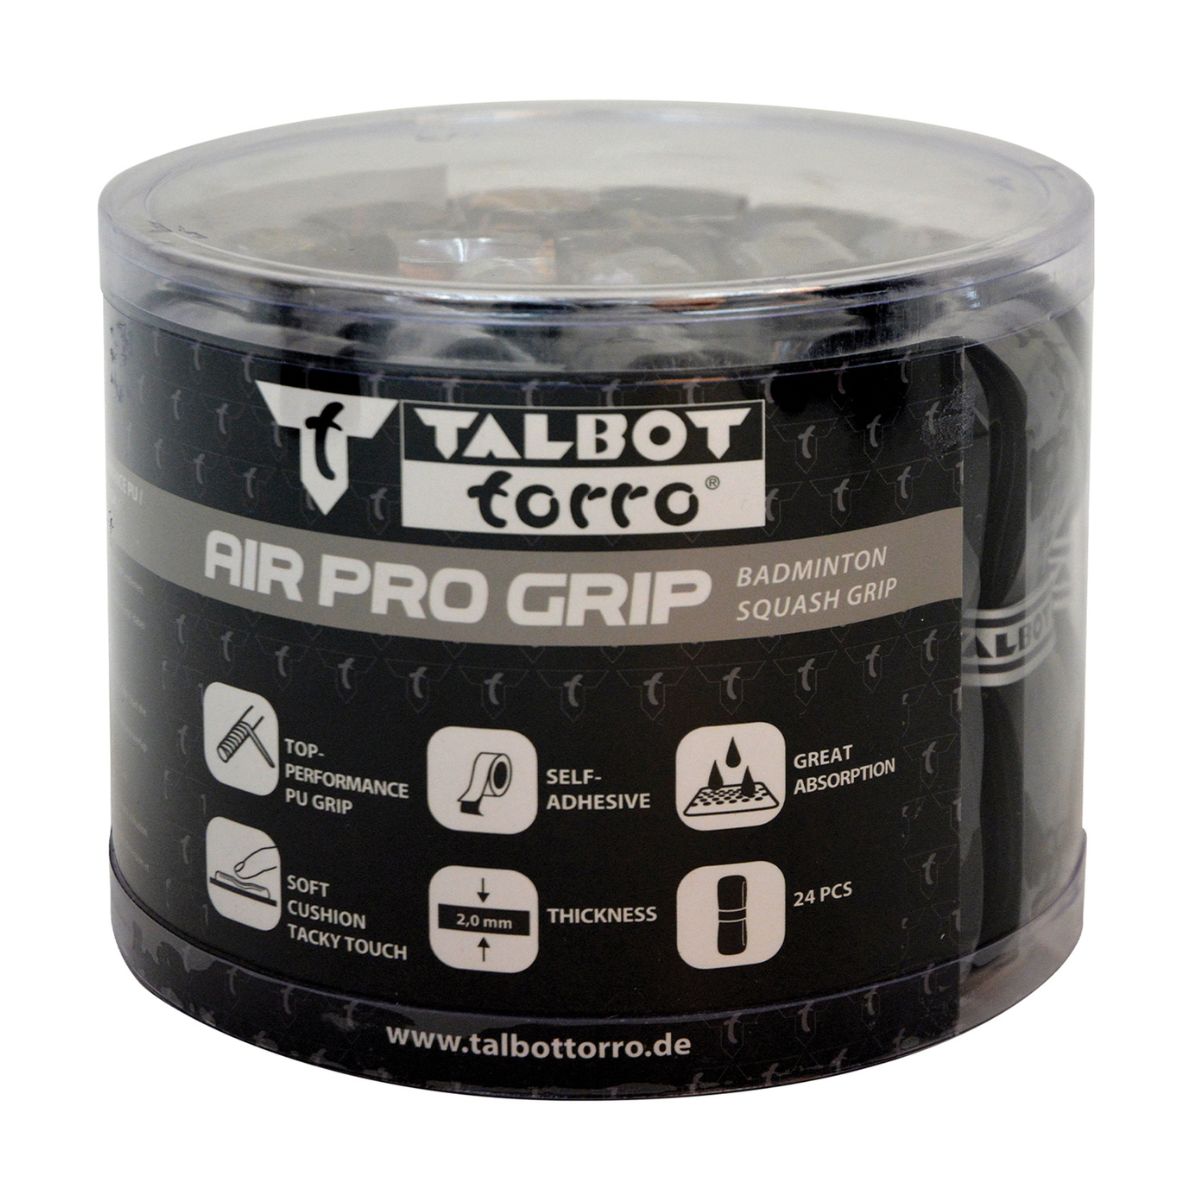 Talbot-Torro 1 Griffband Air Pro Grip für Badminton, Squash, Speedminton etc.   Art. 449163